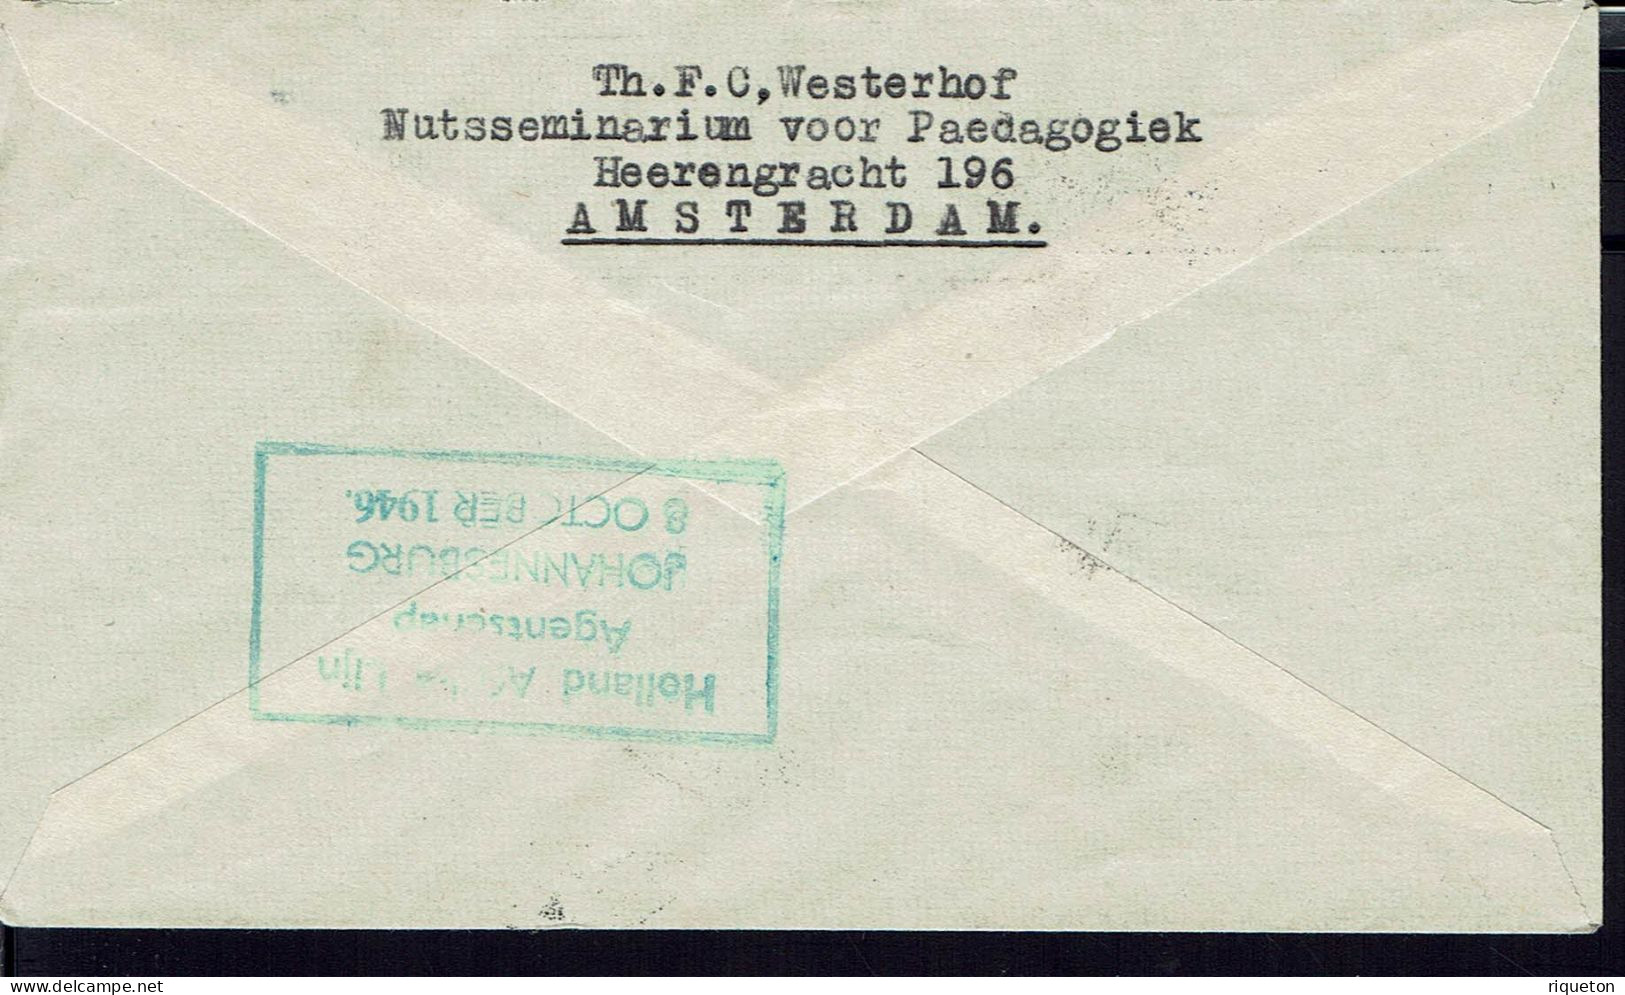 Pays-Bas. K.L.M. Amsterdam 6 Octobre 1946 Nederland-Zuid-Africa. Enveloppe Pour Johannesburg. B/TB. - Airmail